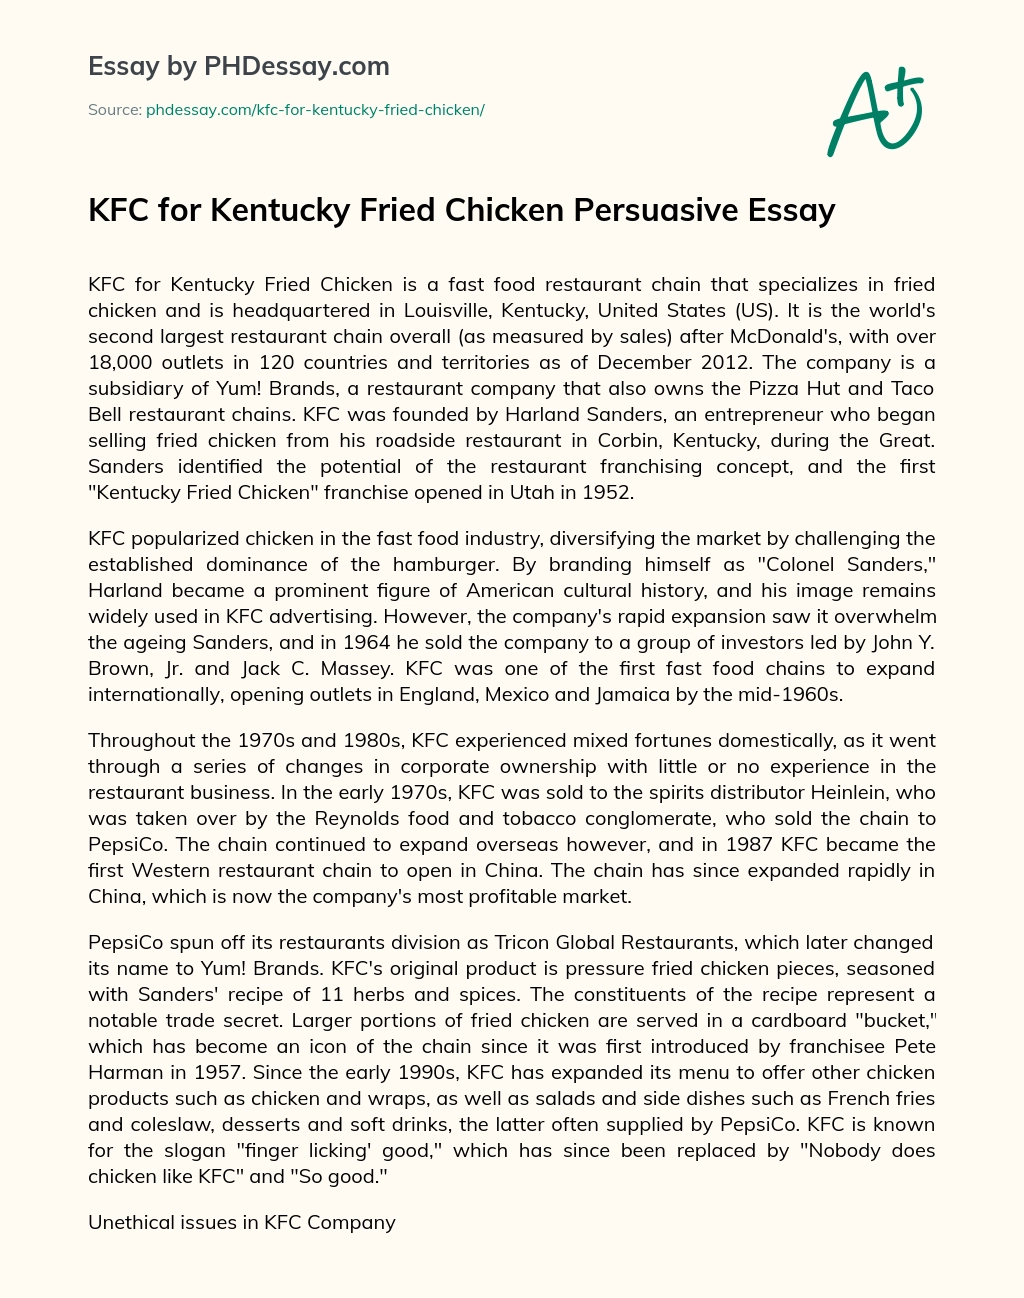 KFC for Kentucky Fried Chicken Persuasive Essay essay